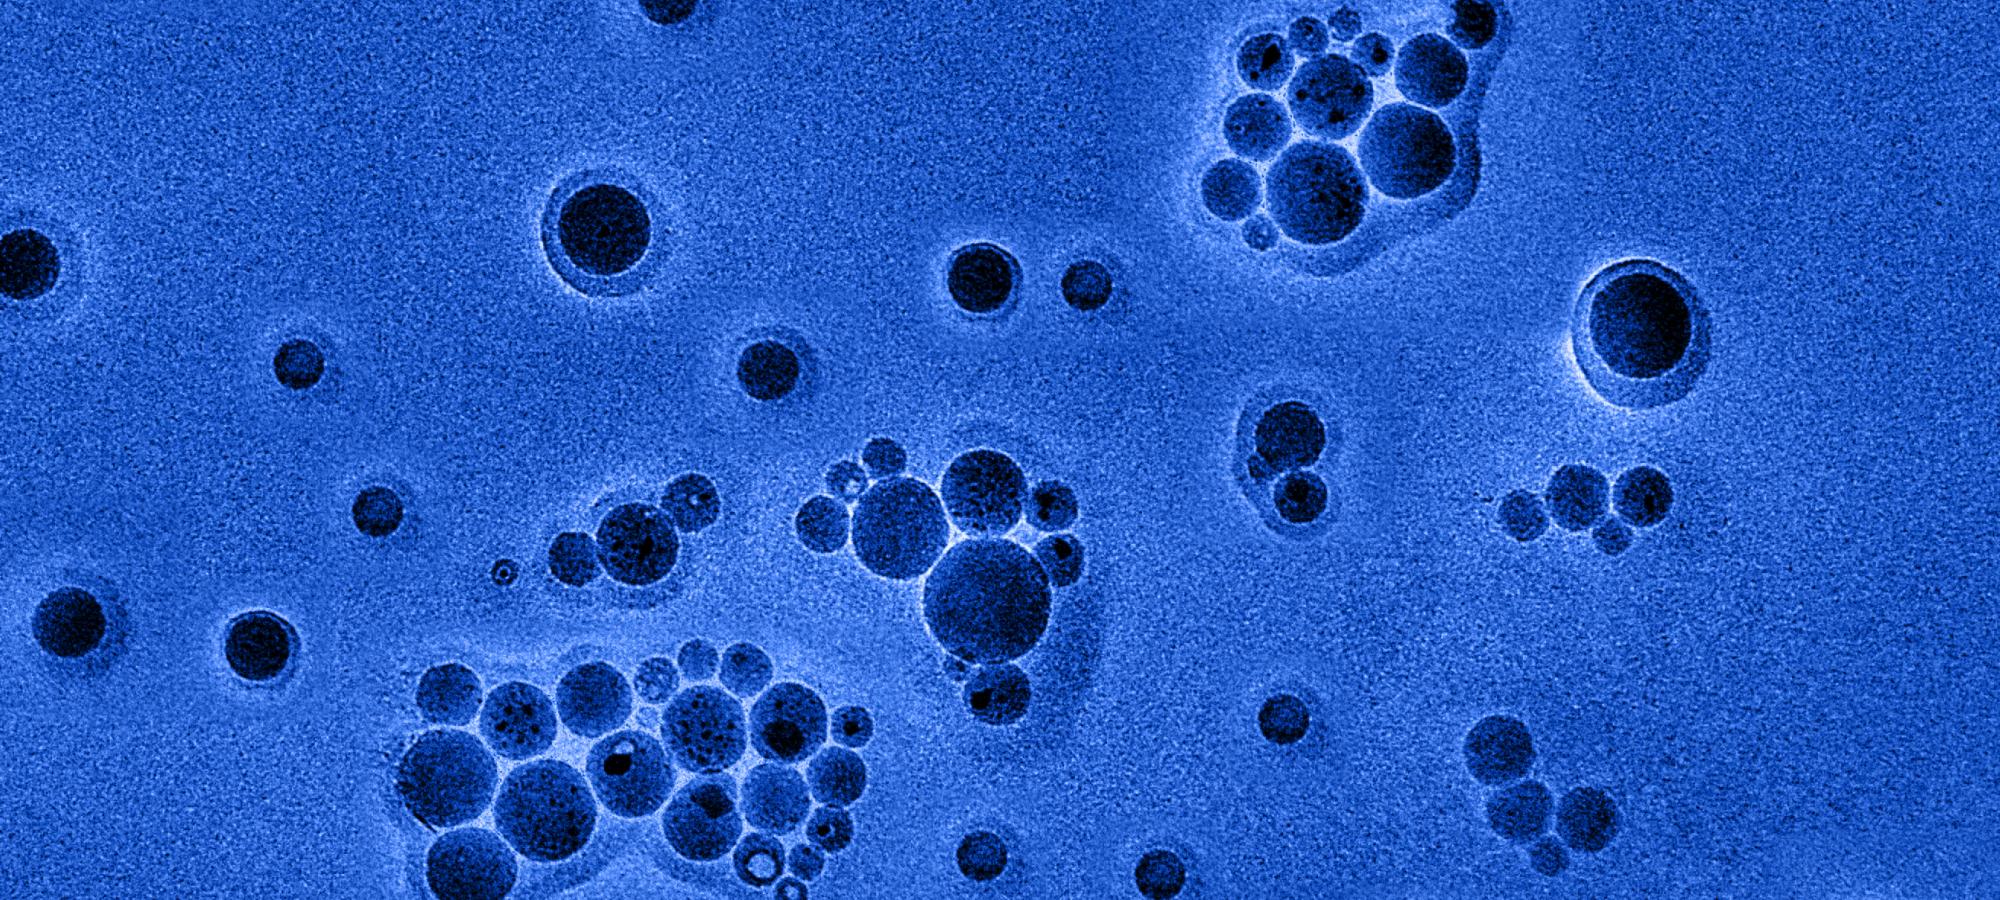 plin nanotechnology laboratory image